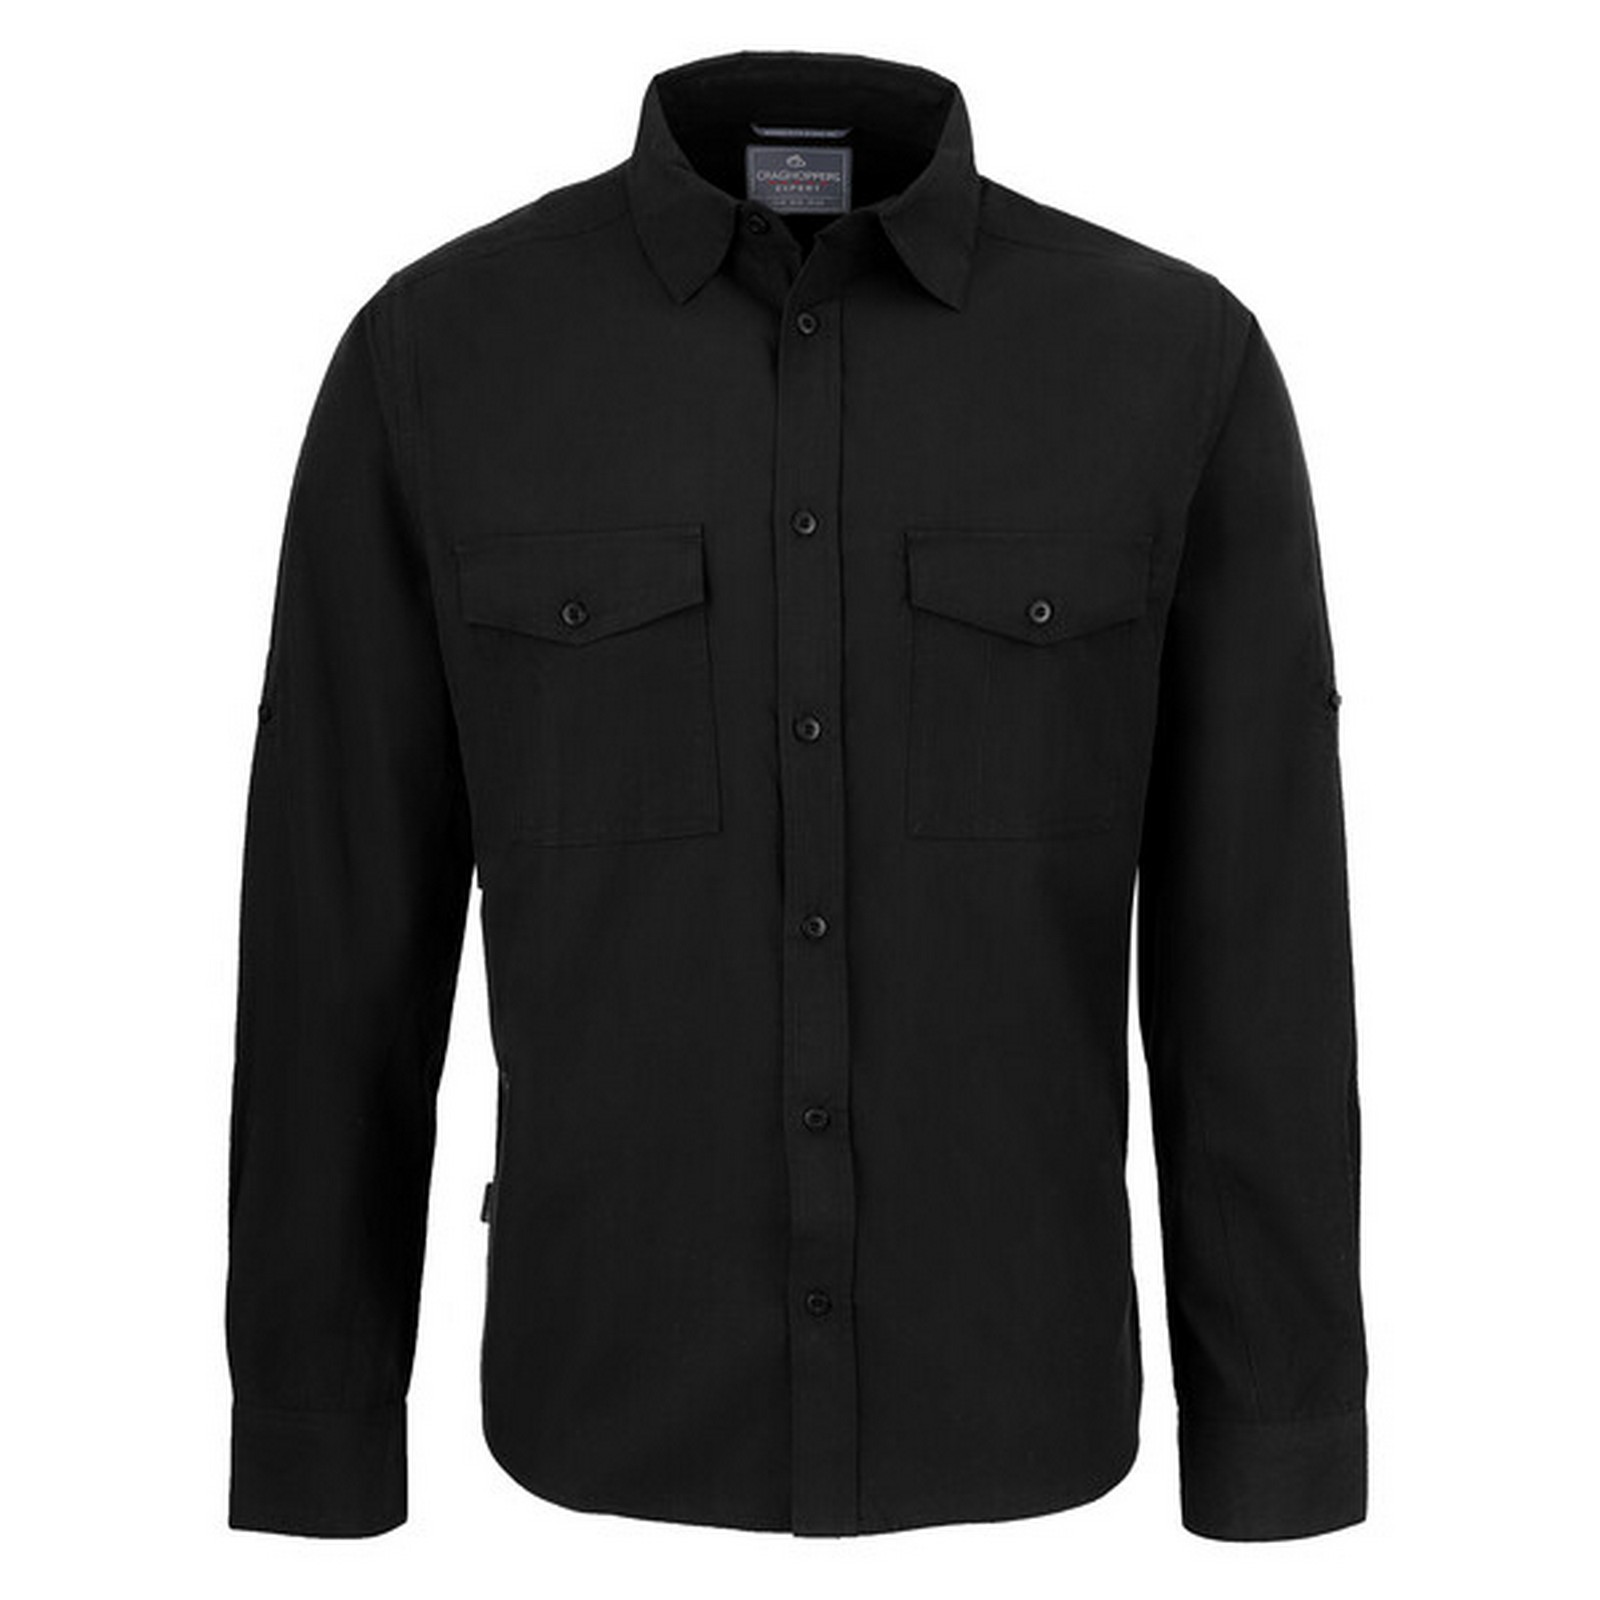 Craghoppers Kiwi long sleeve shirt | WISE Worksafe